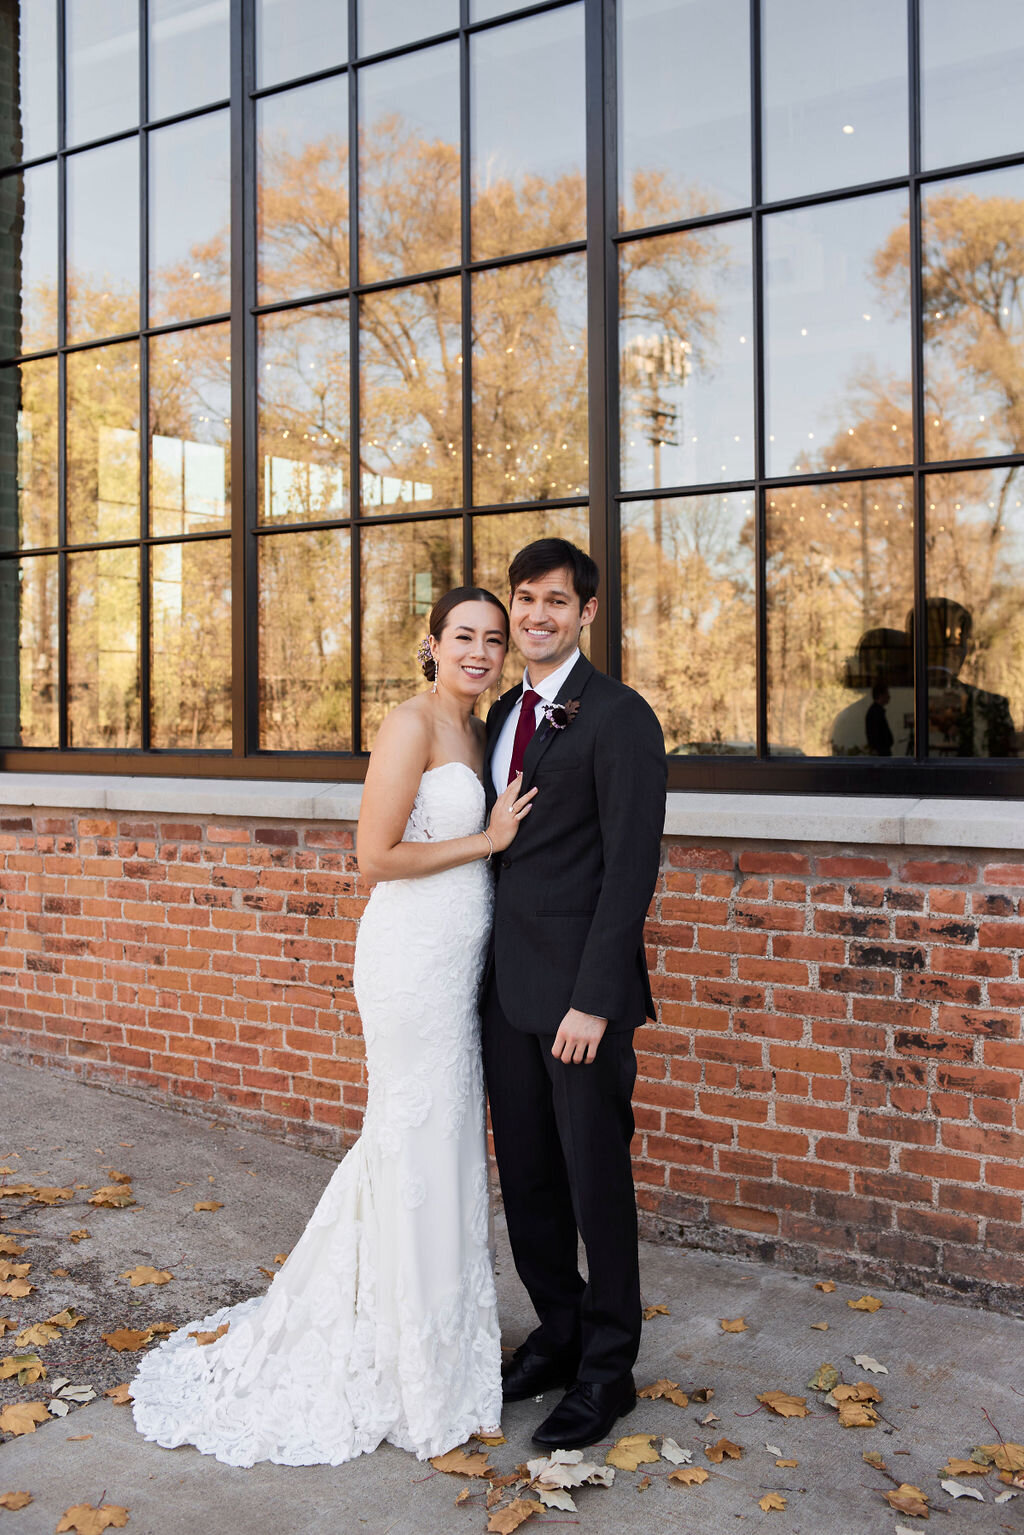 bride-groom-portrait-reflecting-glass-windows-october